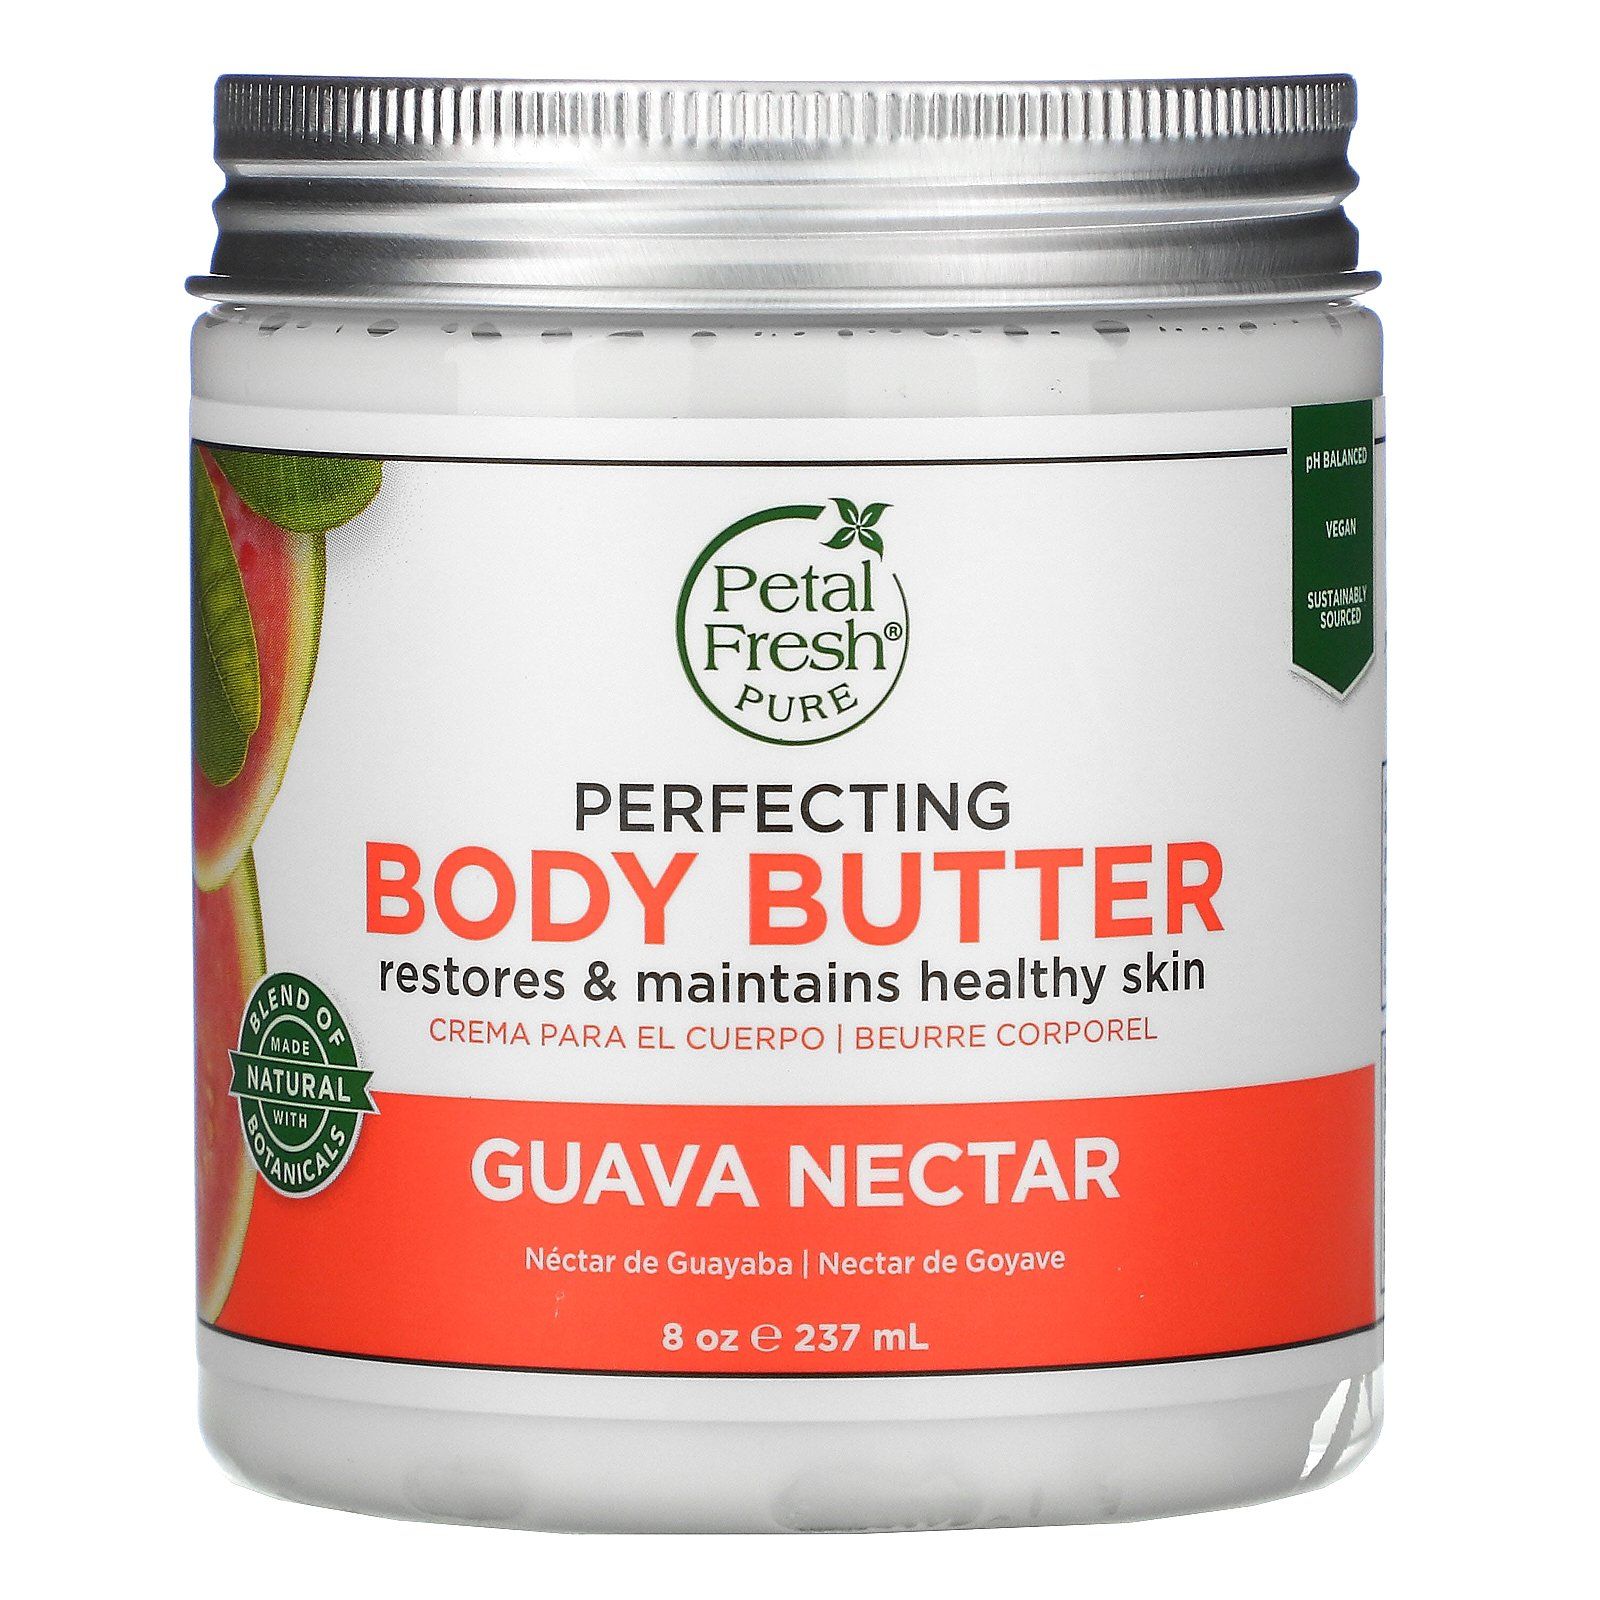 Petal Fresh - Pure, Body Butter, Perfecting, Guava Nectar, 8 Oz (237 Ml)